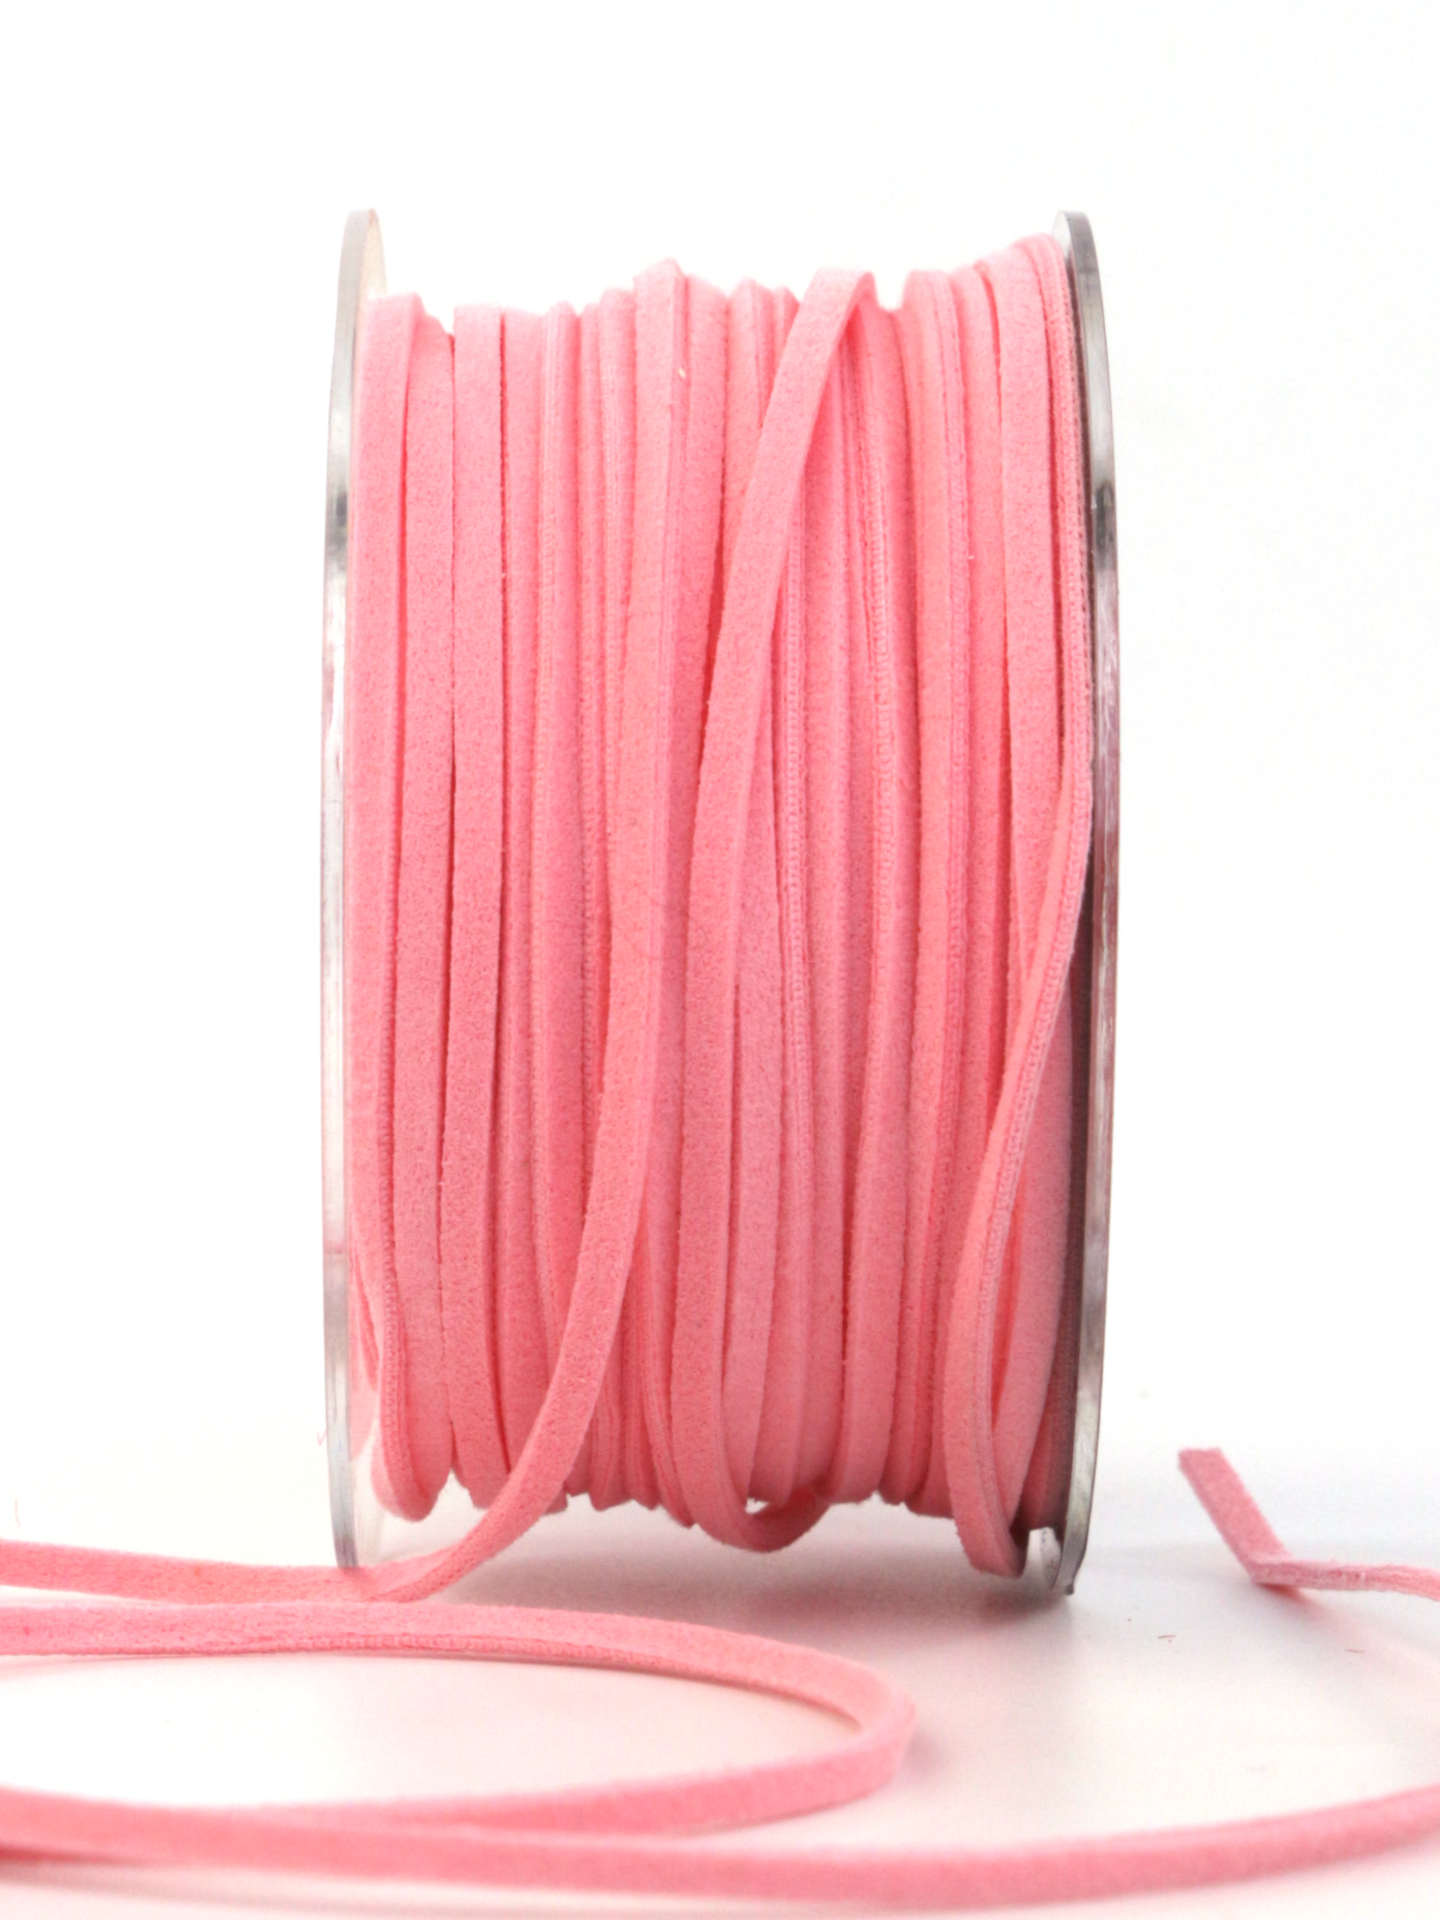 Lederschnur zum Basteln, rosa, 3 mm breit, 25 m Rolle - lederschnur, dekoband